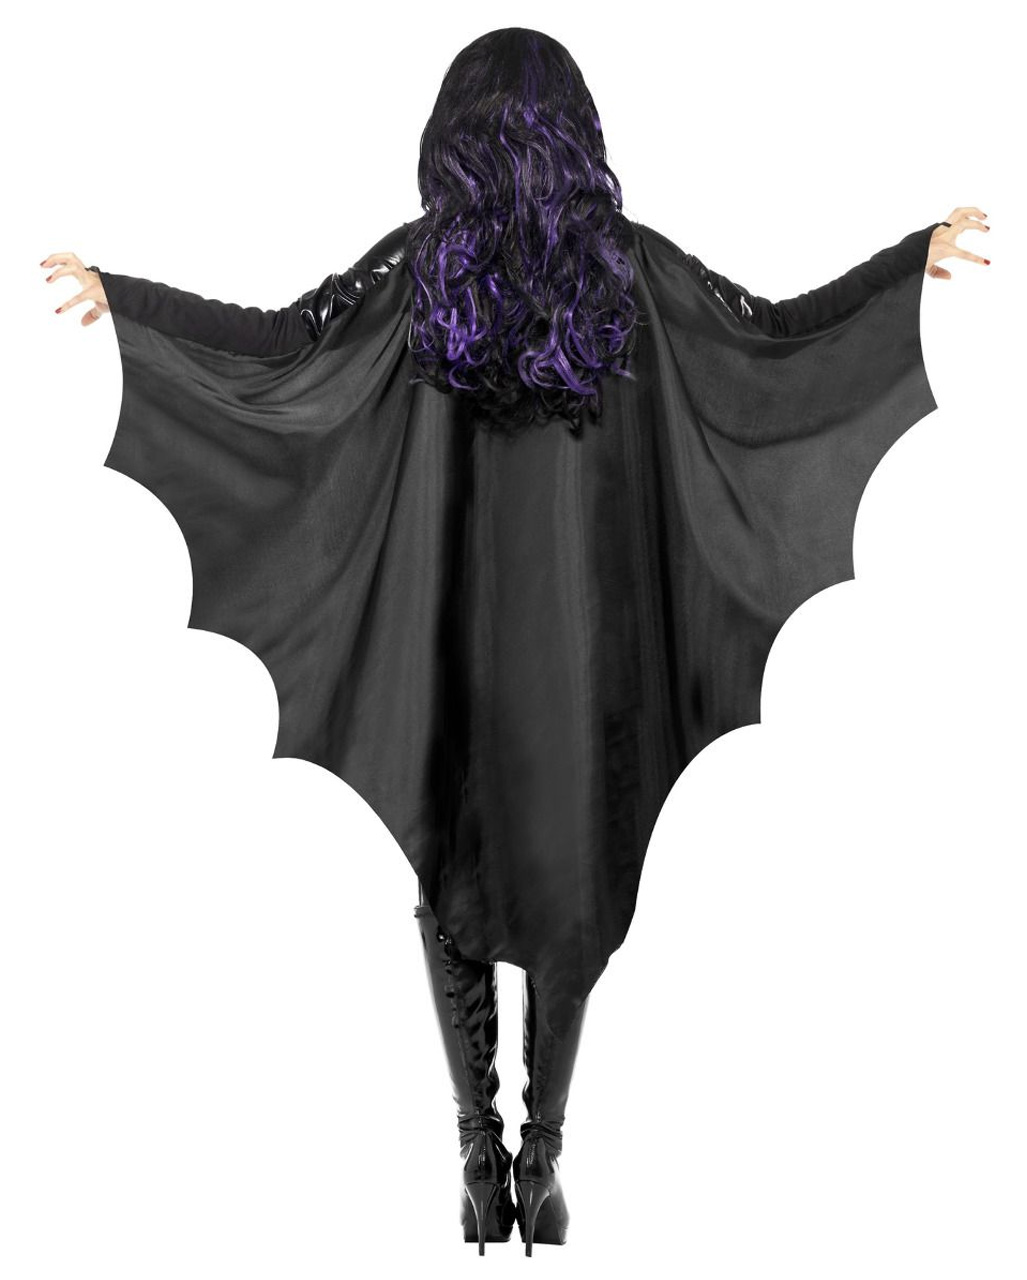 Vampire Bat Wings Black High Collar Boys Girls Kids Childs Fancy Dress Accessory